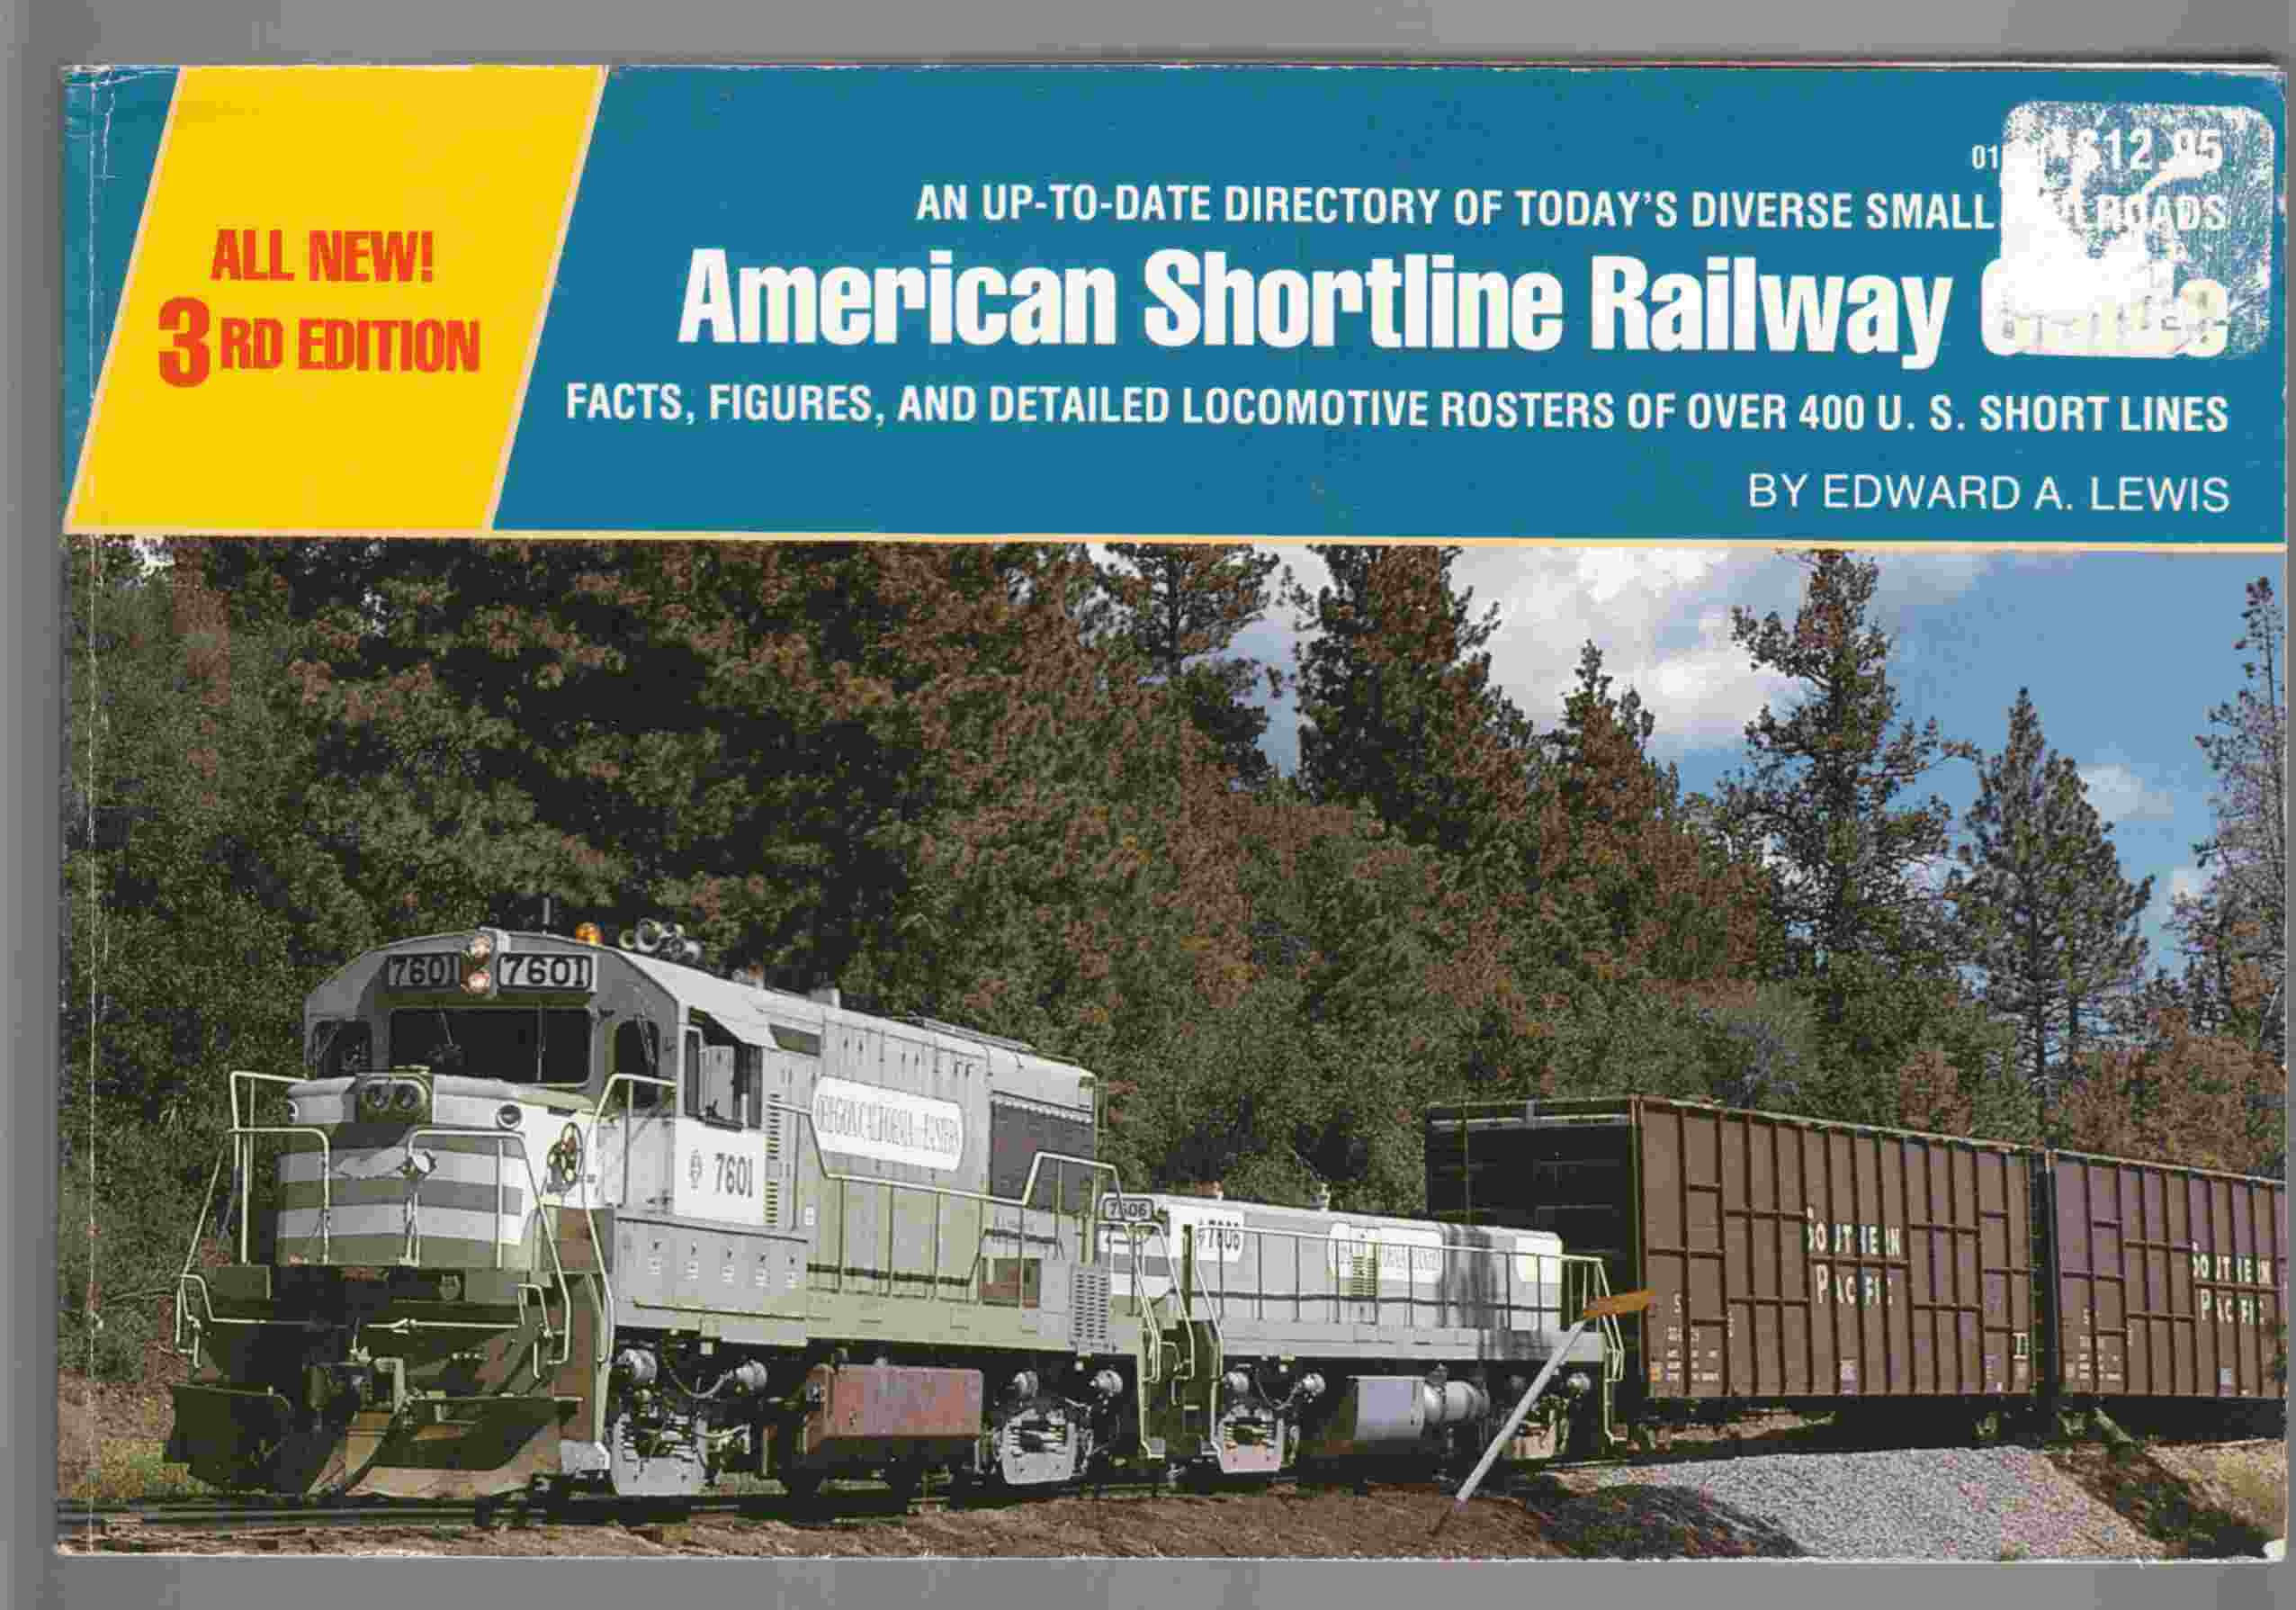 American Shortline Railway Guide